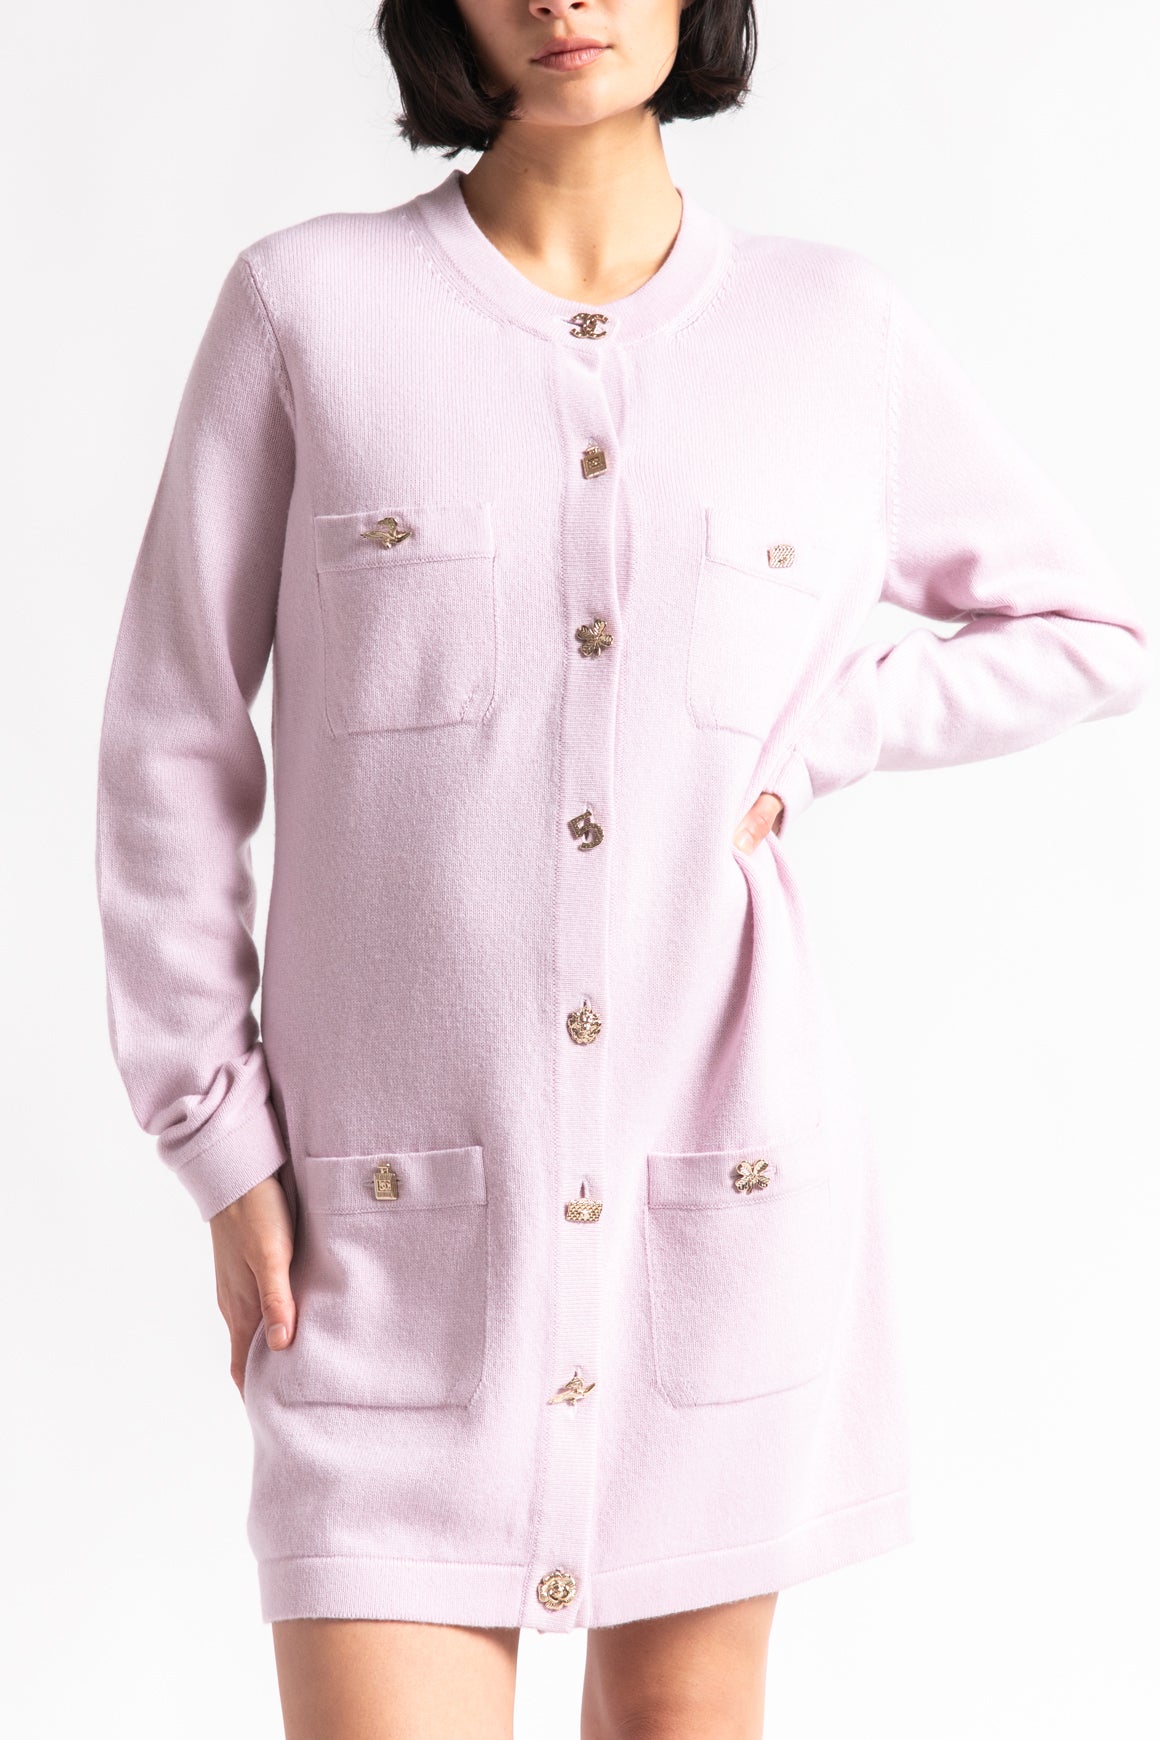 CHANEL Pink Sweater Dress